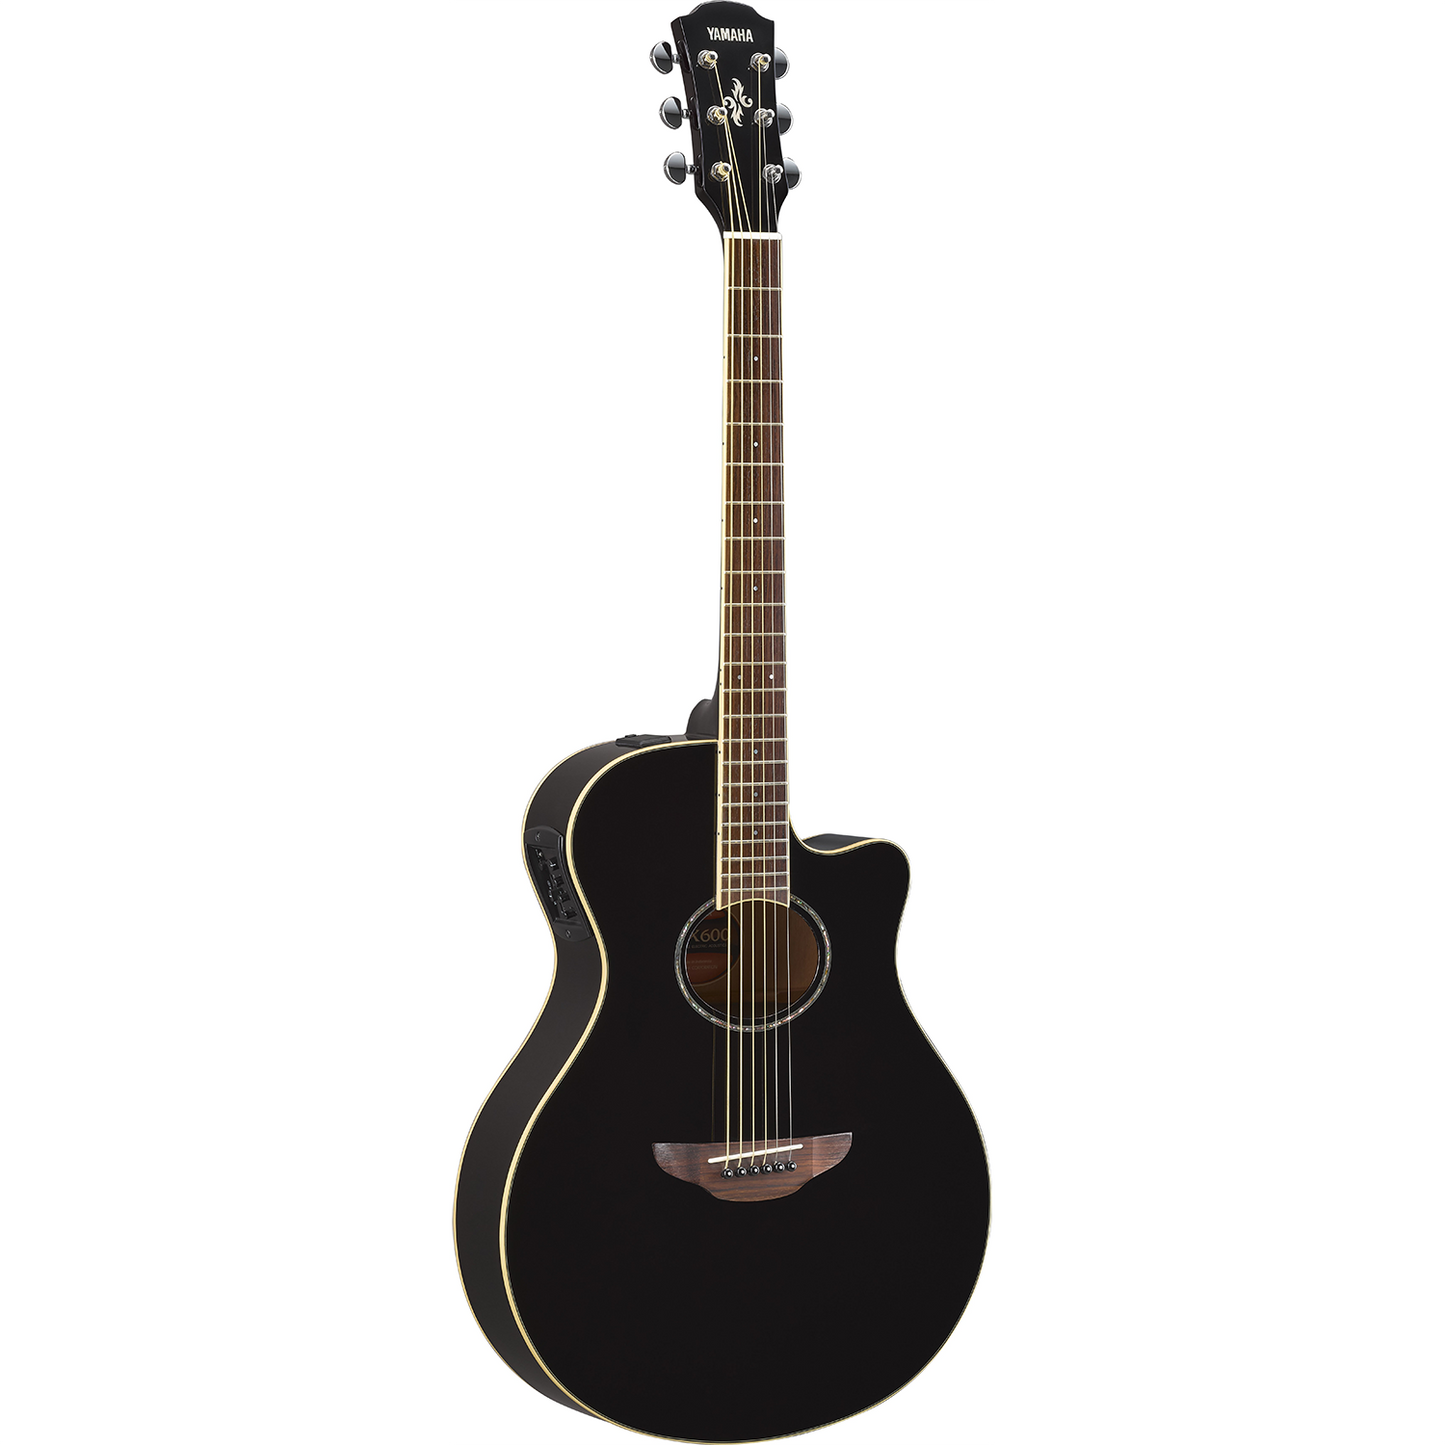 Yamaha APX600 Black Acoustic Guitar